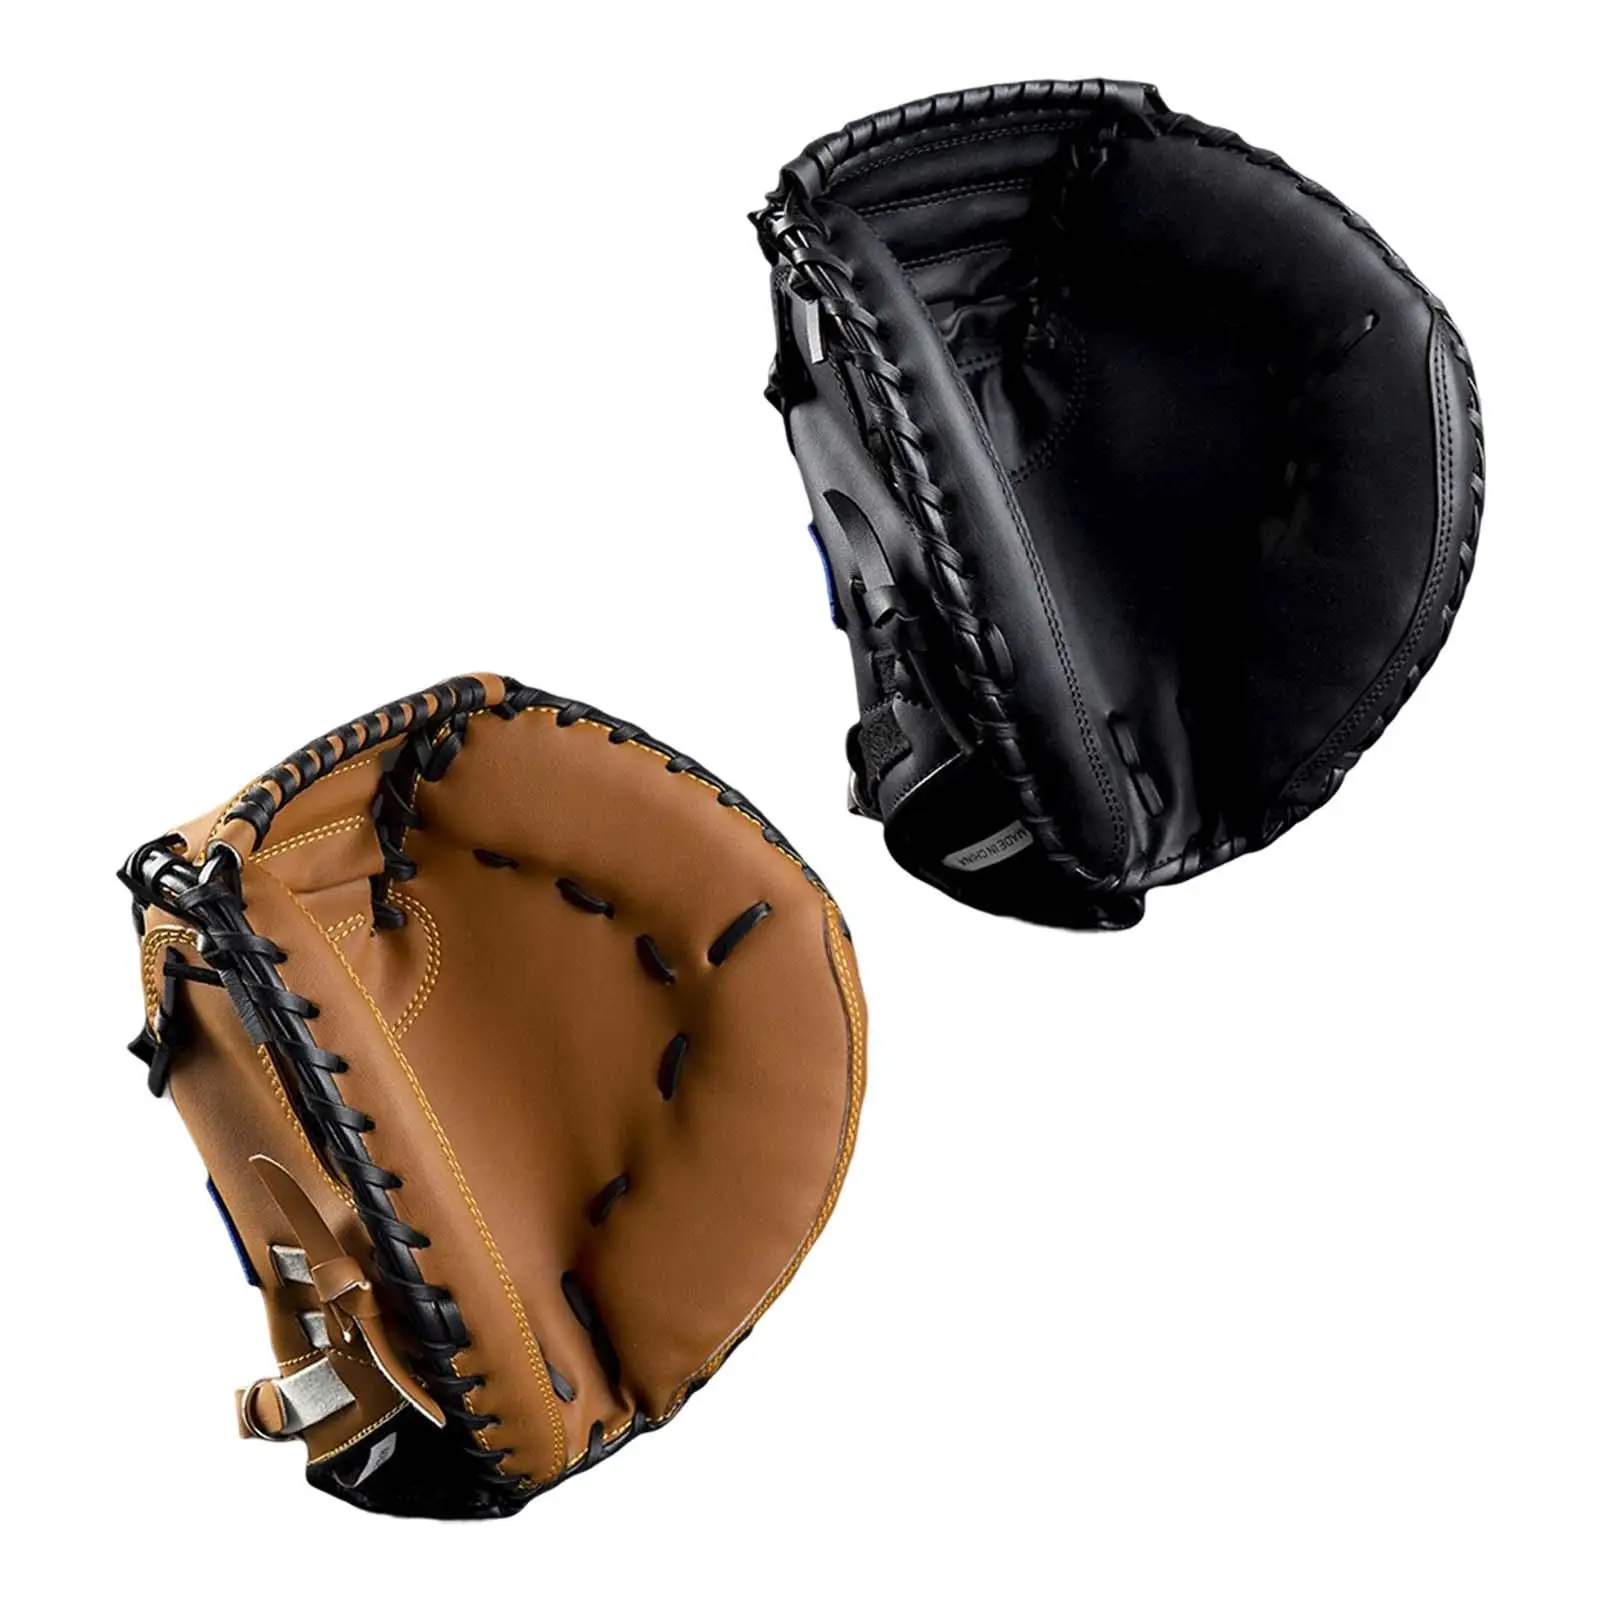 Baseball Glove Left Hand Use Durable PU Leather 12.5